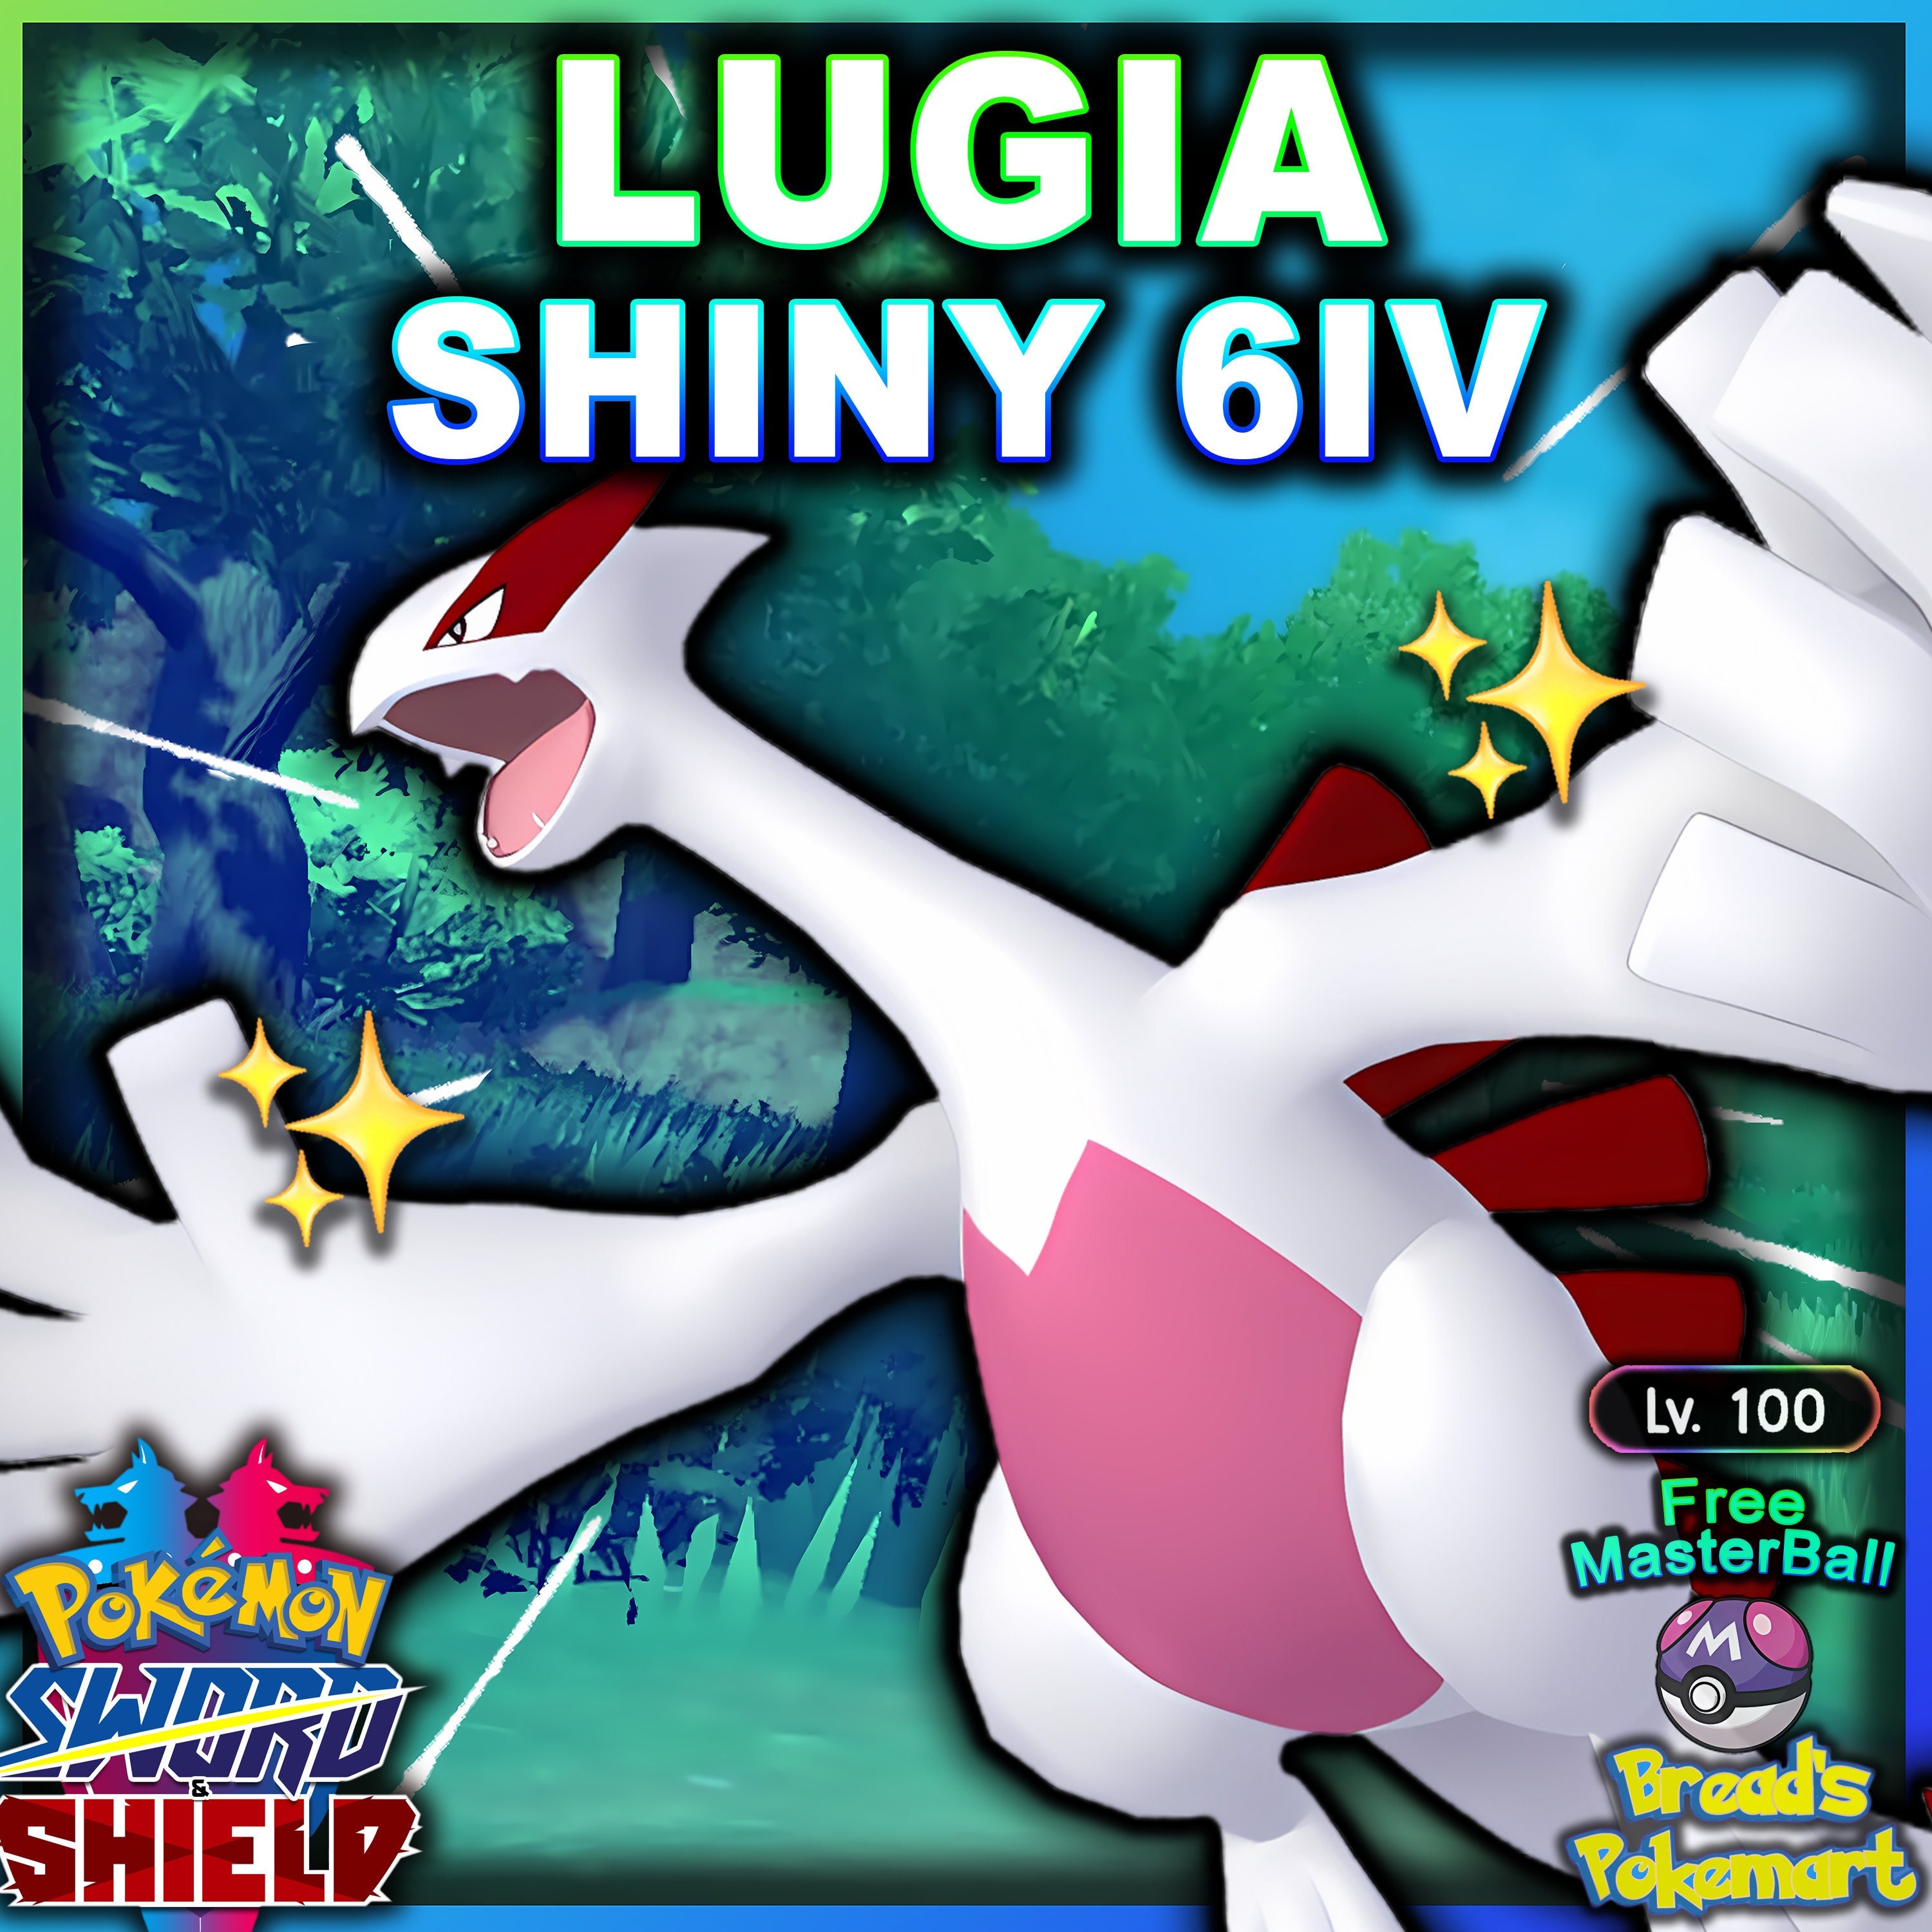 Shiny LUGIA 6IV / Pokemon Brilliant Diamond and Shining Pearl